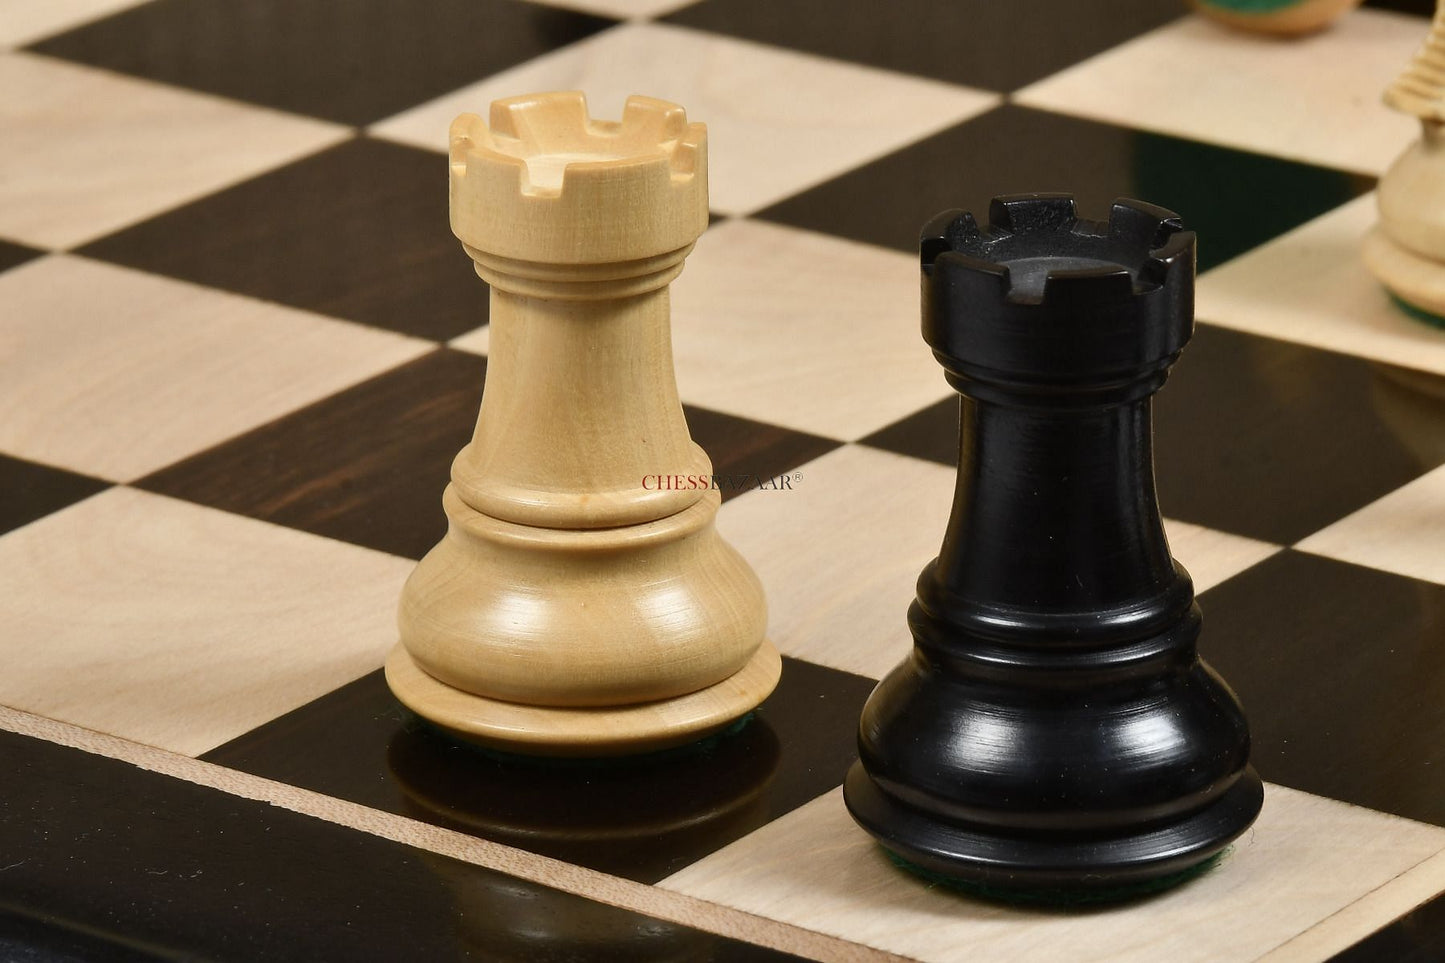 Desert Gold Staunton Series Wooden Chess Pieces in Ebonized Boxwood & Natural Boxwood - 4.0" King